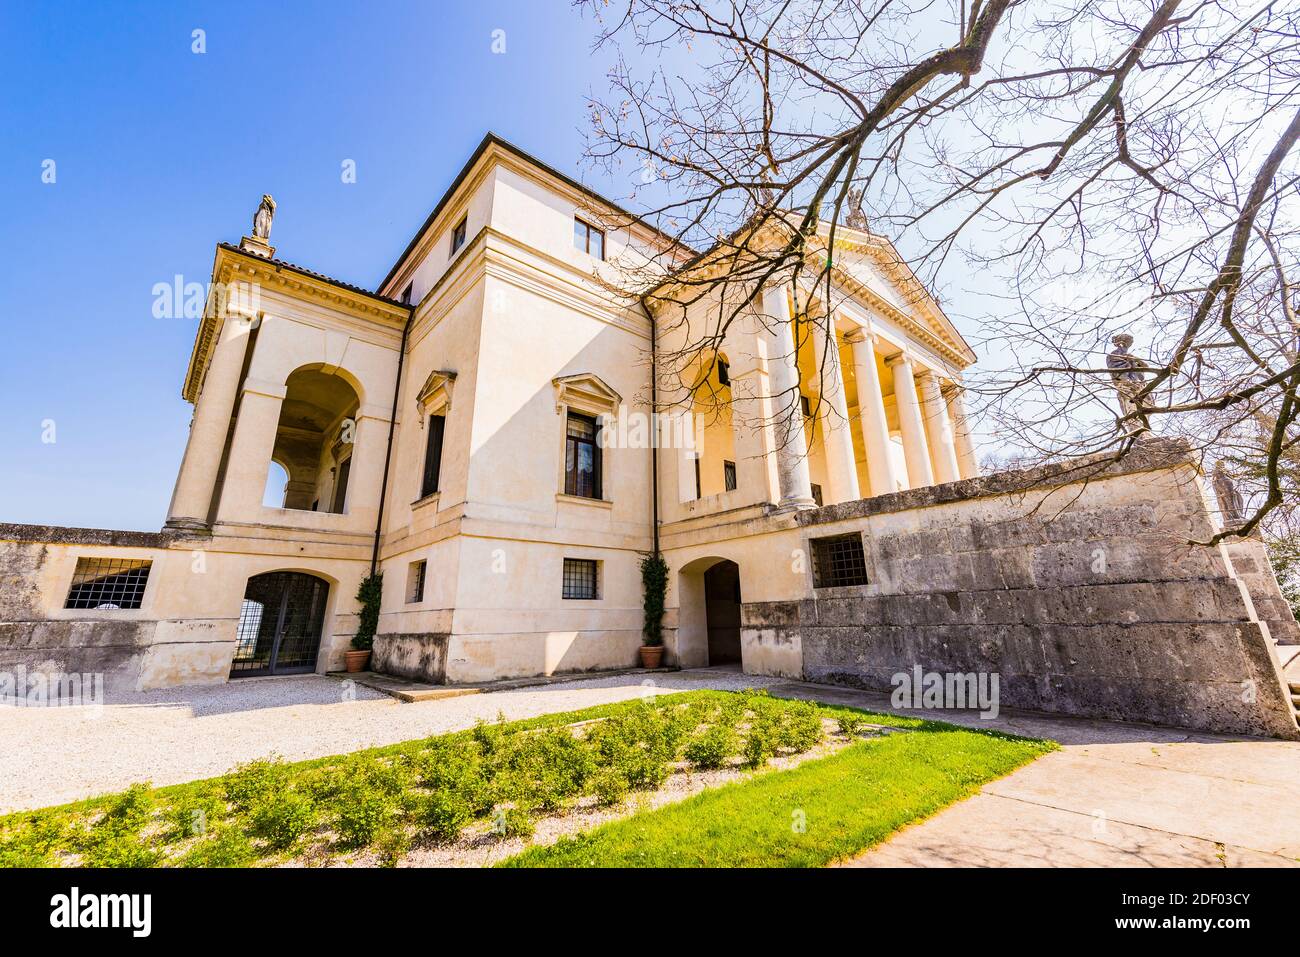 La Villa la Rotonda est une villa néoclassique située juste à l'extérieur de Vicenza, dans le nord de l'Italie, conçue par Andrea Palladio. Le nom correct de la villa est Villa Almeric Banque D'Images